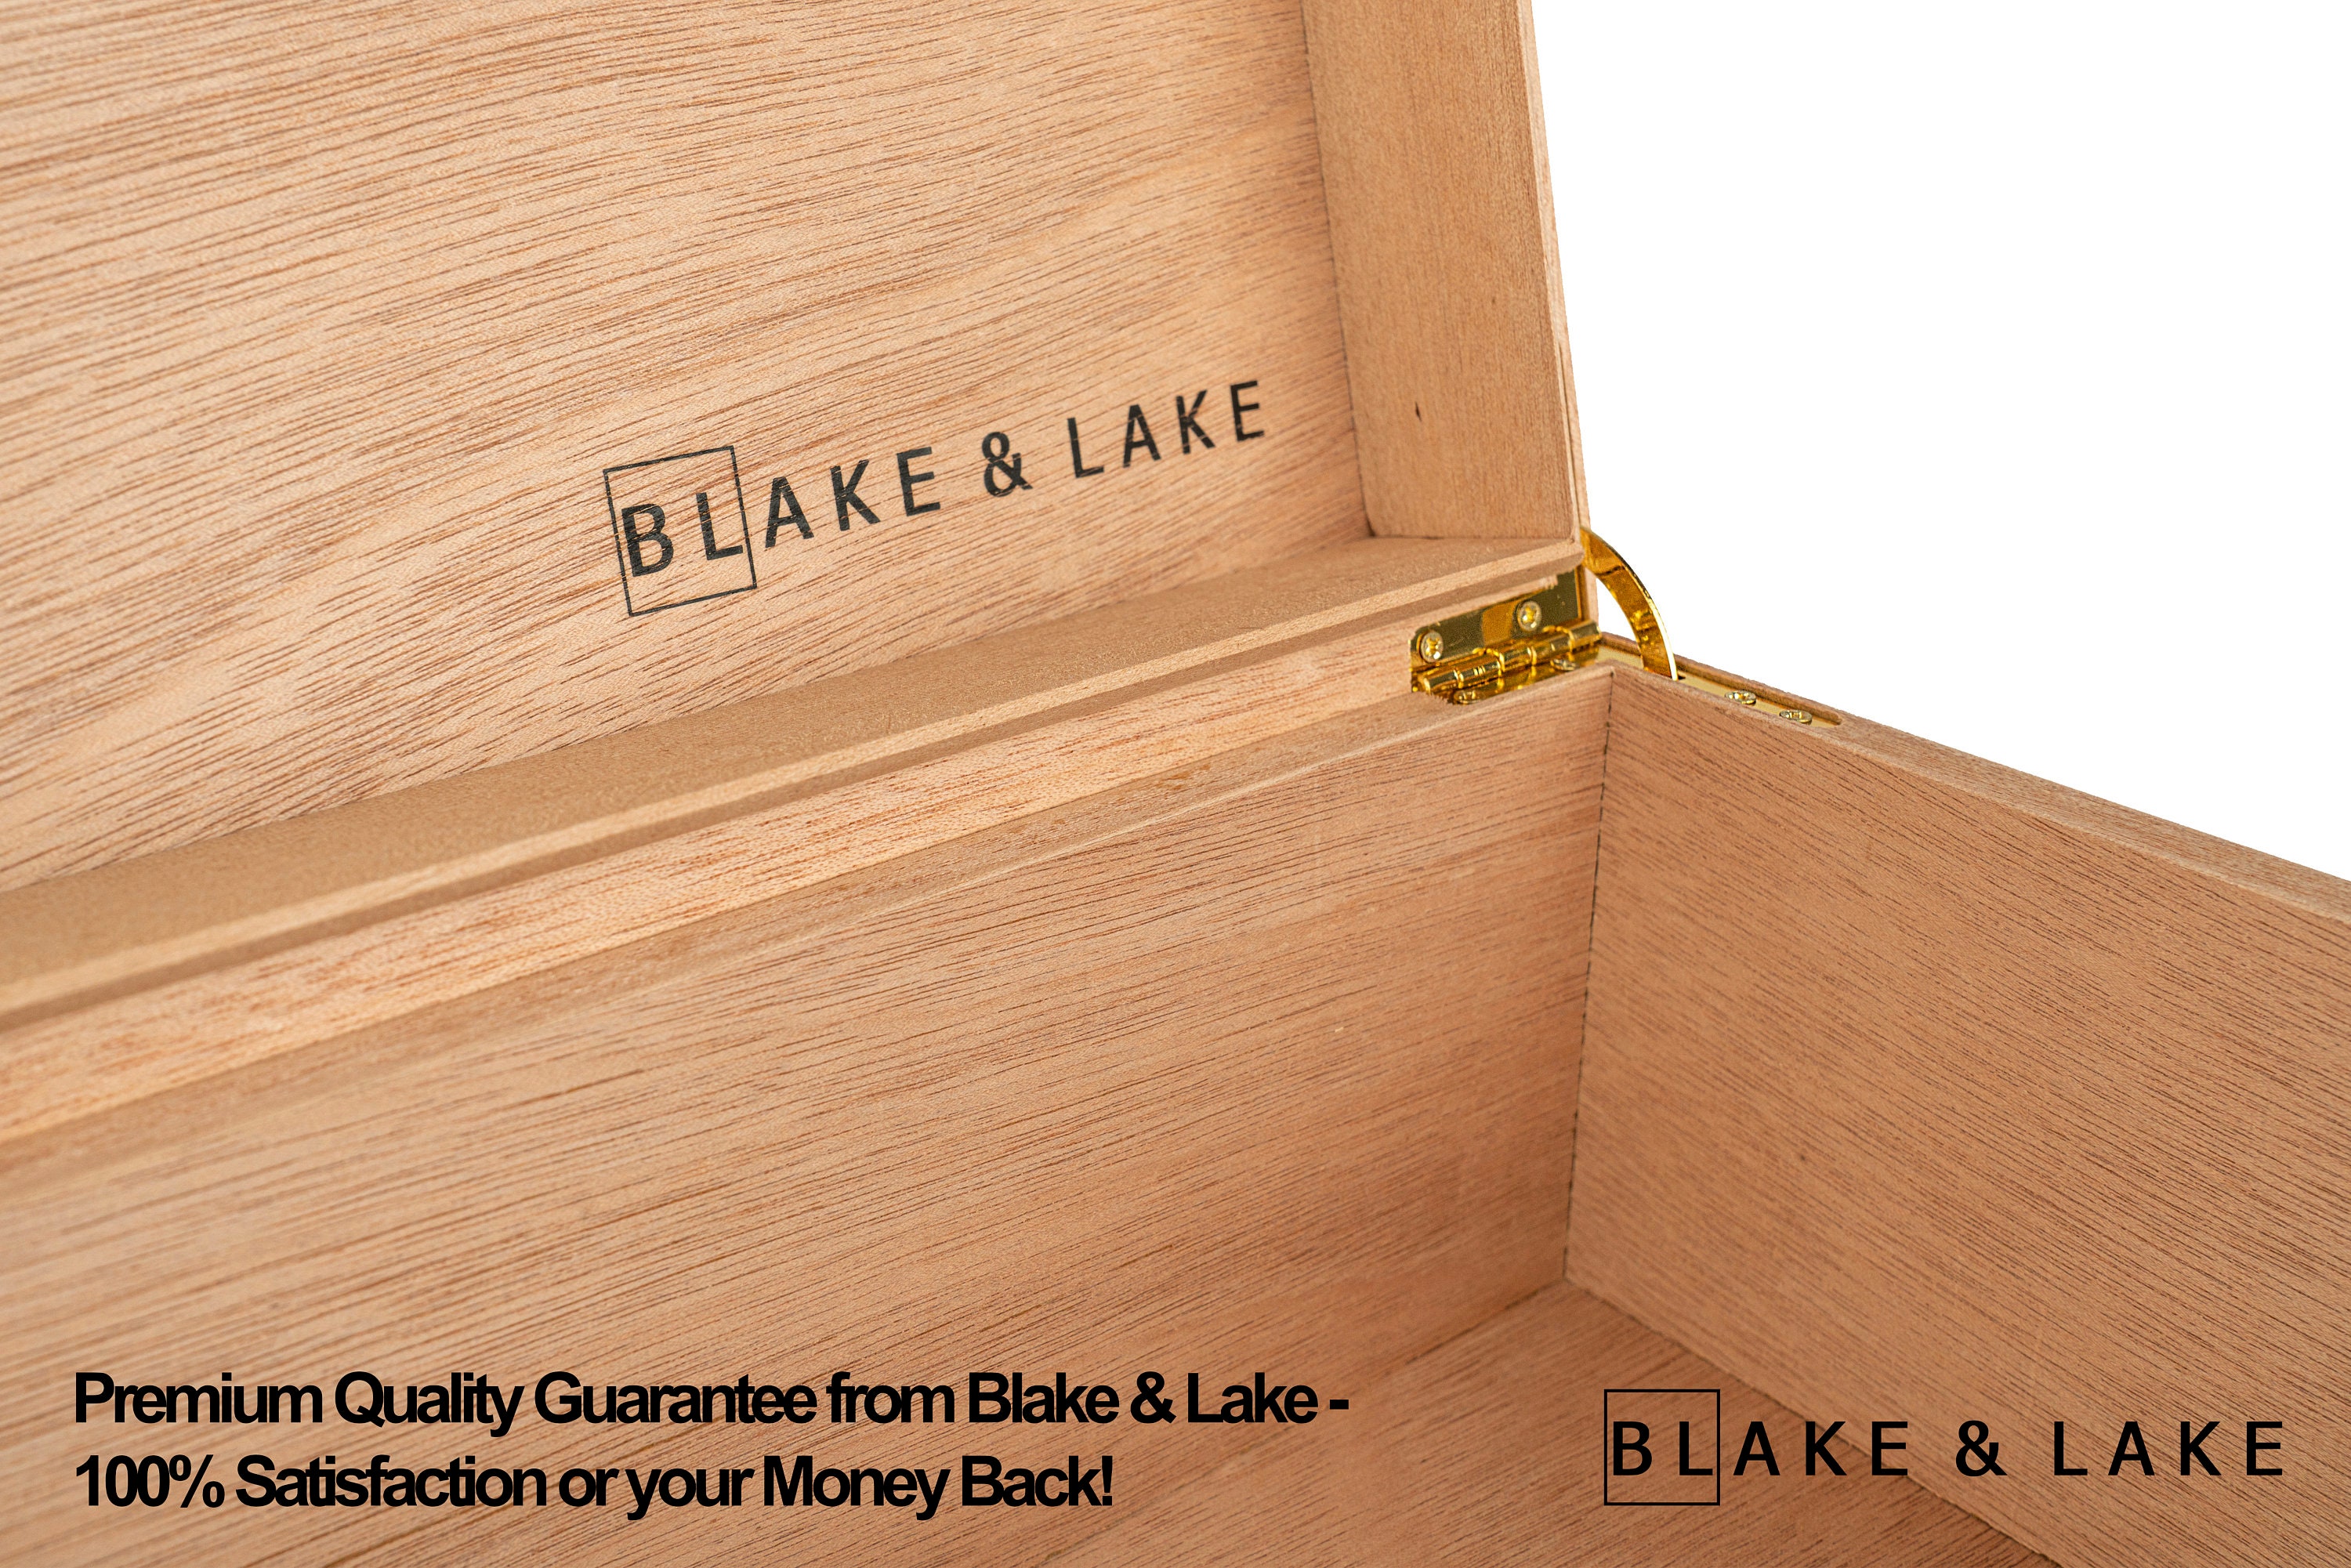 Large Wooden Keepsake Box With Lid Wood Storage Box for Home Keepsakes  White Oak Stash Box With Cedar Wood Inlay Blonde Catchall Box 